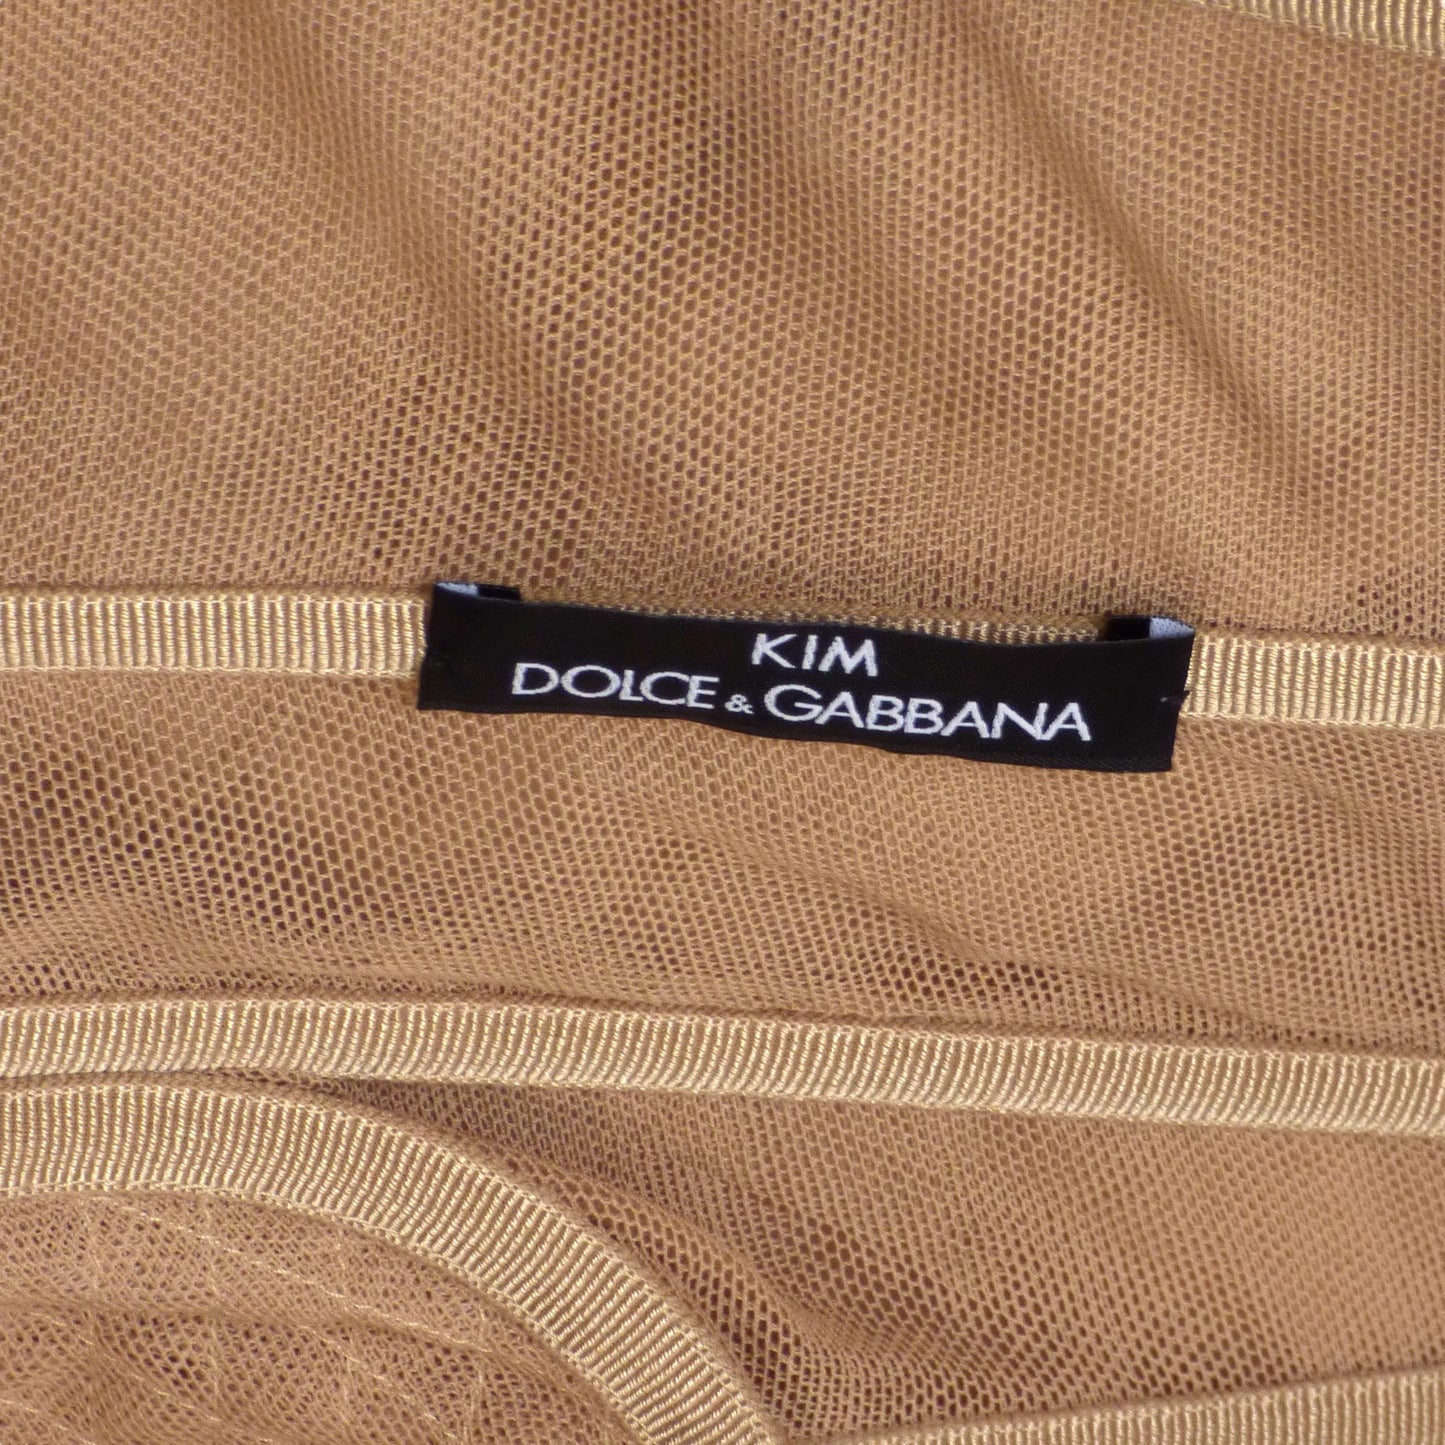 DOLCE & GABBANA- NWT PVC "1998" Kim Dress, Size 8